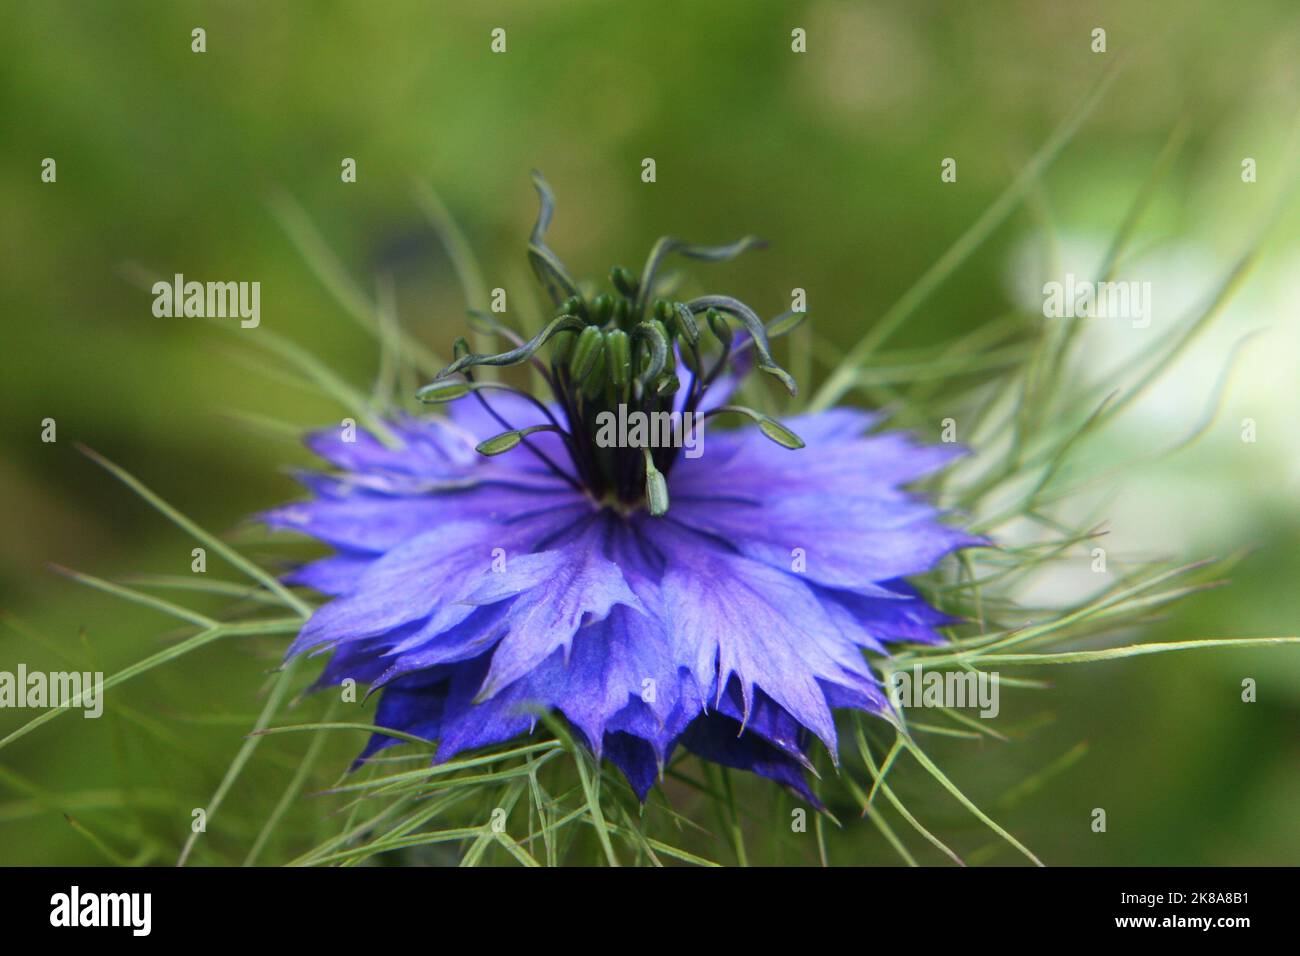 Bright blue flower of black caraway or black cumin or nigella or kalonji (Nigella sativa) close up Stock Photo